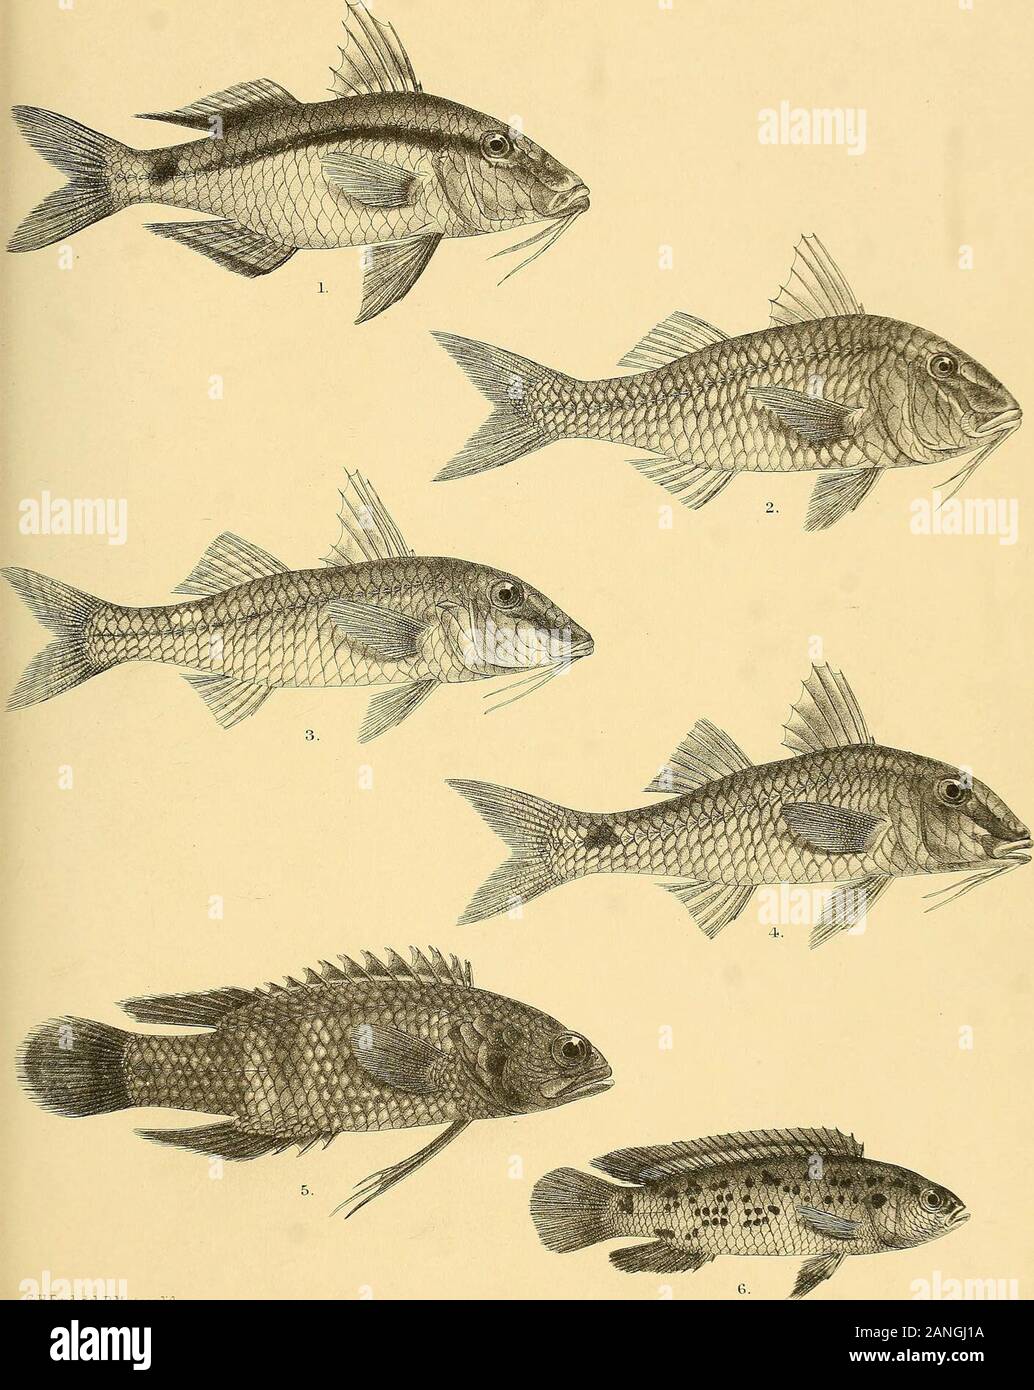 The fishes of India; being a natural history of the fishes known to inhabit the seas and fresh waters of India, Burma, and Ceylon . S-E-Sbrd IbI P-lfinternlith,. intern Bros. imp. 1, TOXOTES MICROLEPIS. 2.UPENE01DES VITTATUS. 3.U. SULPHUREU3. 4.U.TRAG-ULA. 5.U.BENSASI. 6,U.FLAV0LINEATUS. Days Fishes of India. P ate XXXI. i 1 iel RMnternlith, Mm.tera.Bros imp. 1, UPENEUS MACRONEMUS. 2. U. LUTEUS. 3, U. DISPLURUS. 4, U.INDICUS. 5. PLESIOPS NIGRICANS. 6.BADIS BUCHANANI. Bayfe Fishes of India. *pC3* % -£-£ Stock Photo